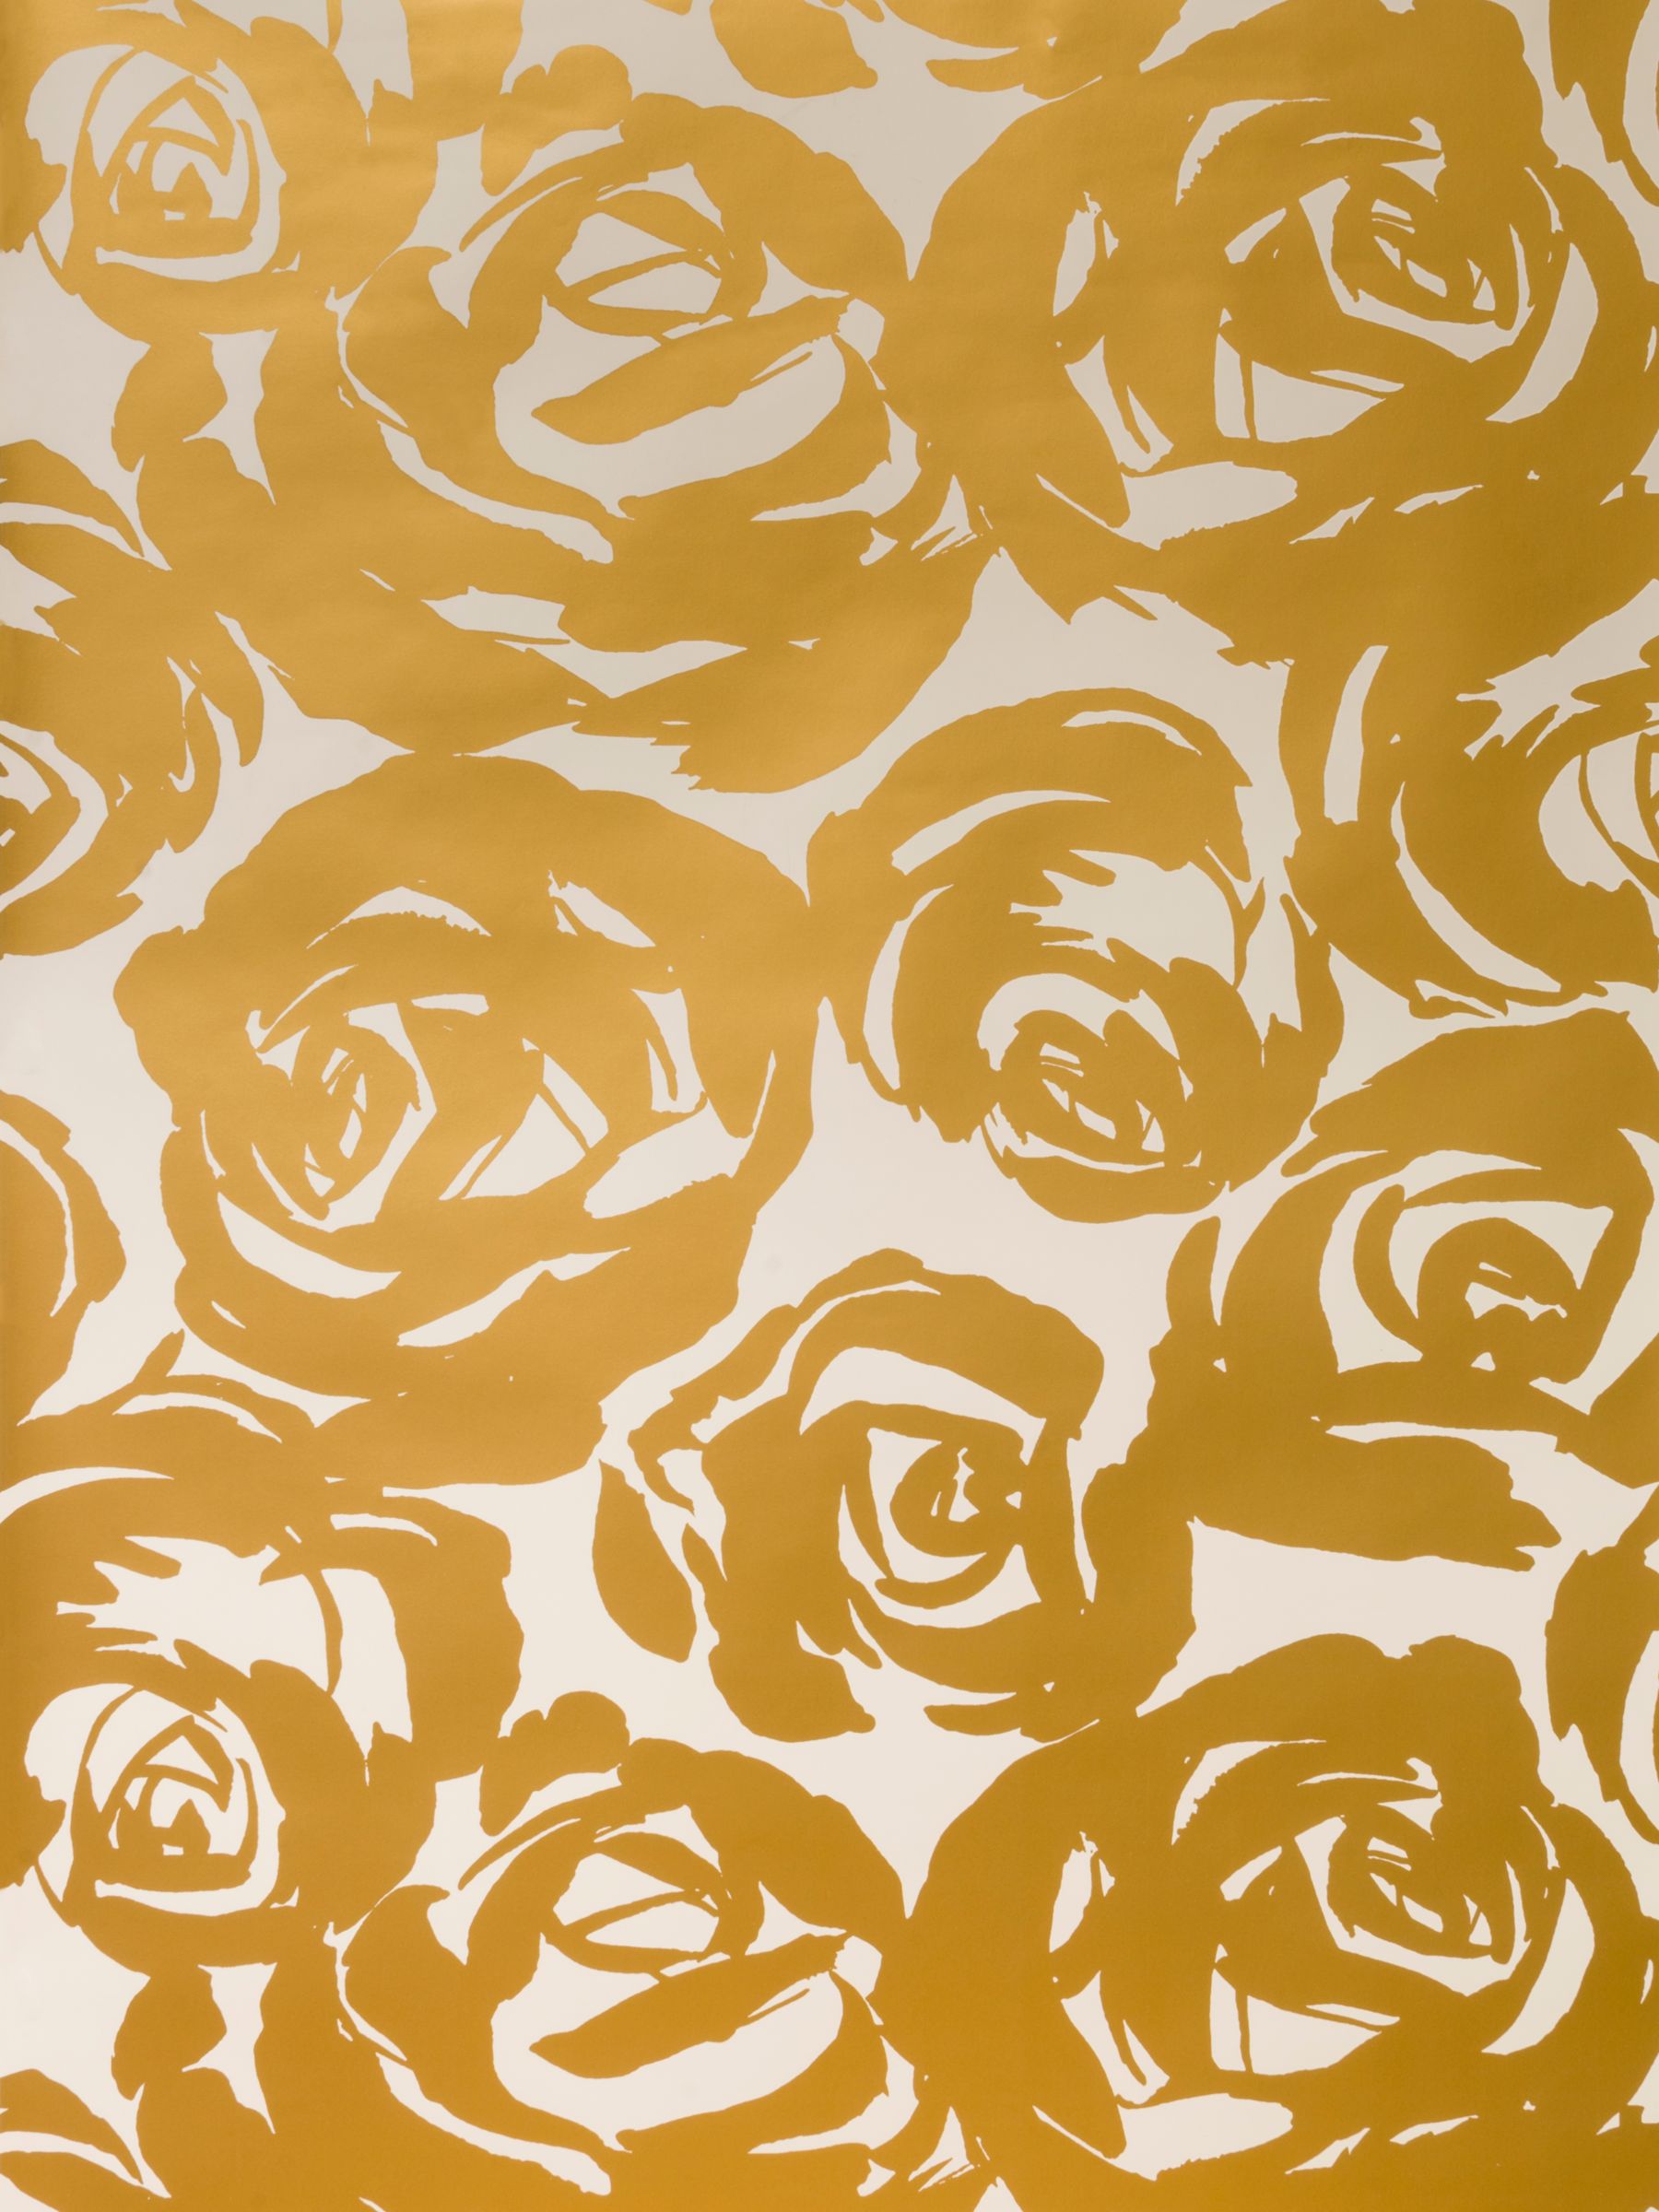 Kate Spade New York For Gp J Baker Whimsies Deco Floral Wallpaper At John Lewis Partners